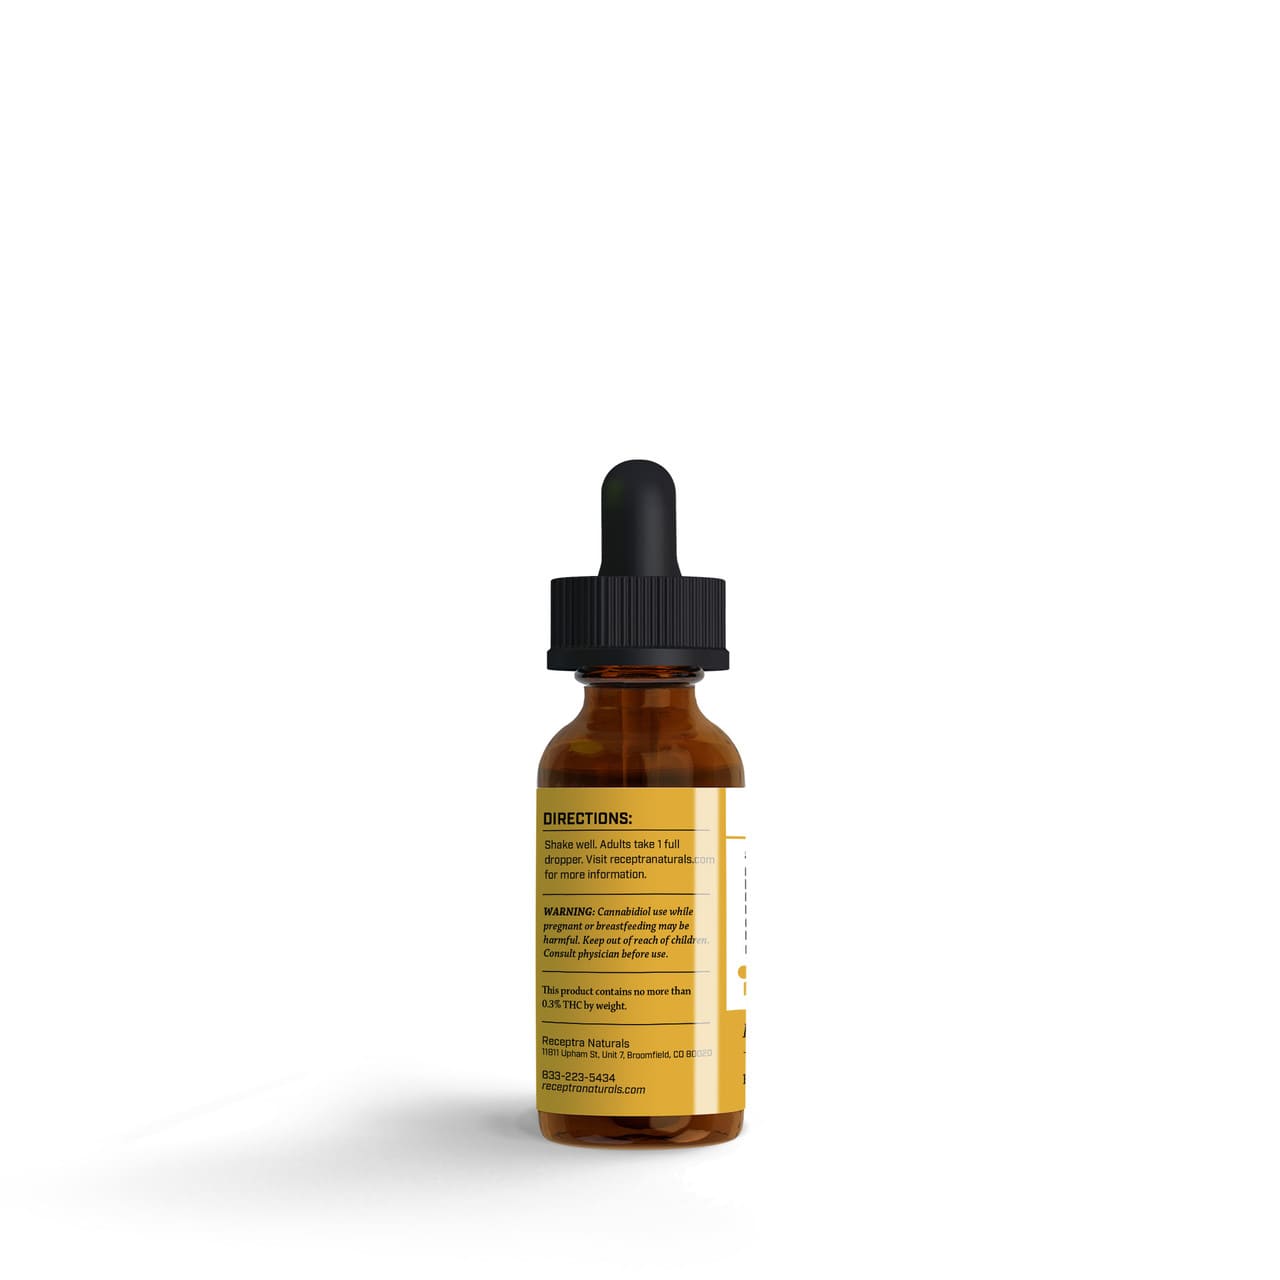 Receptra Serious Relief + Turmeric Tincture 33mg/dose image4